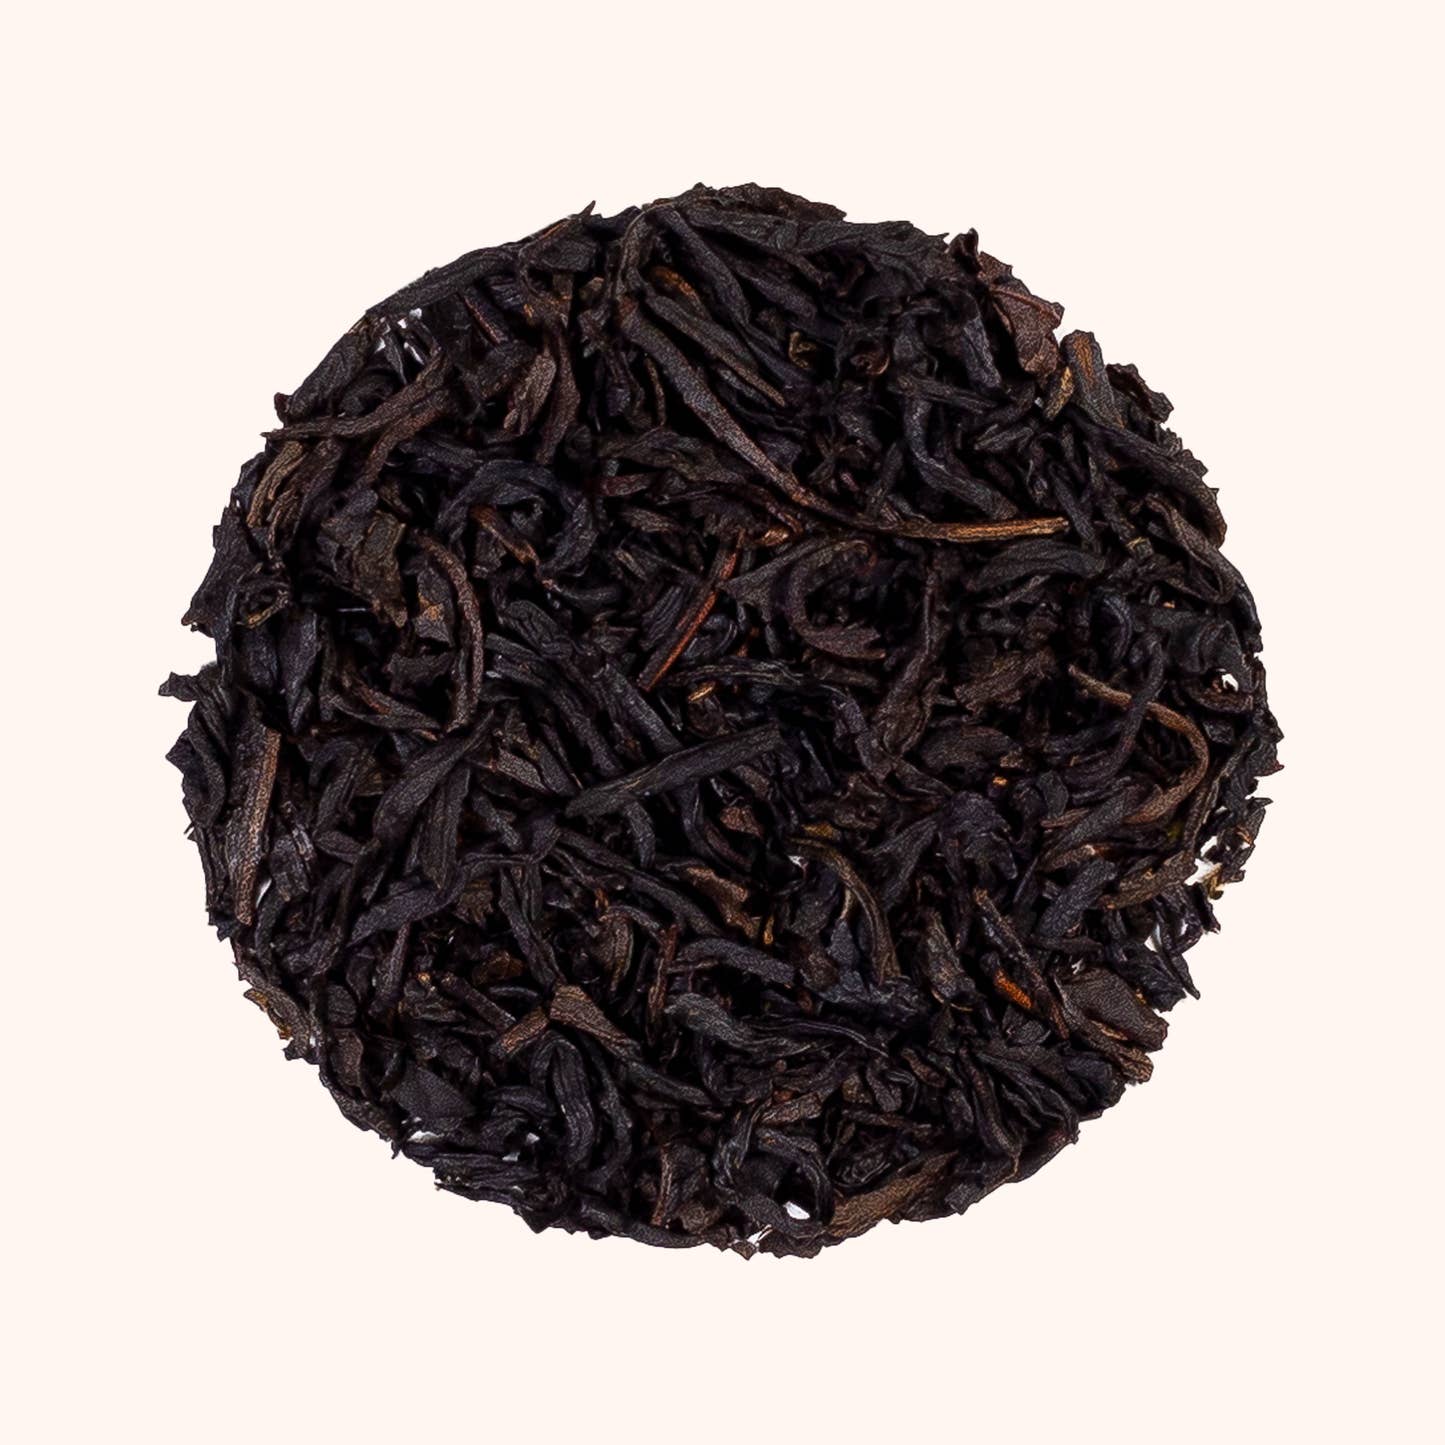 Sipping Streams Tea Company Organic Earl Grey loose leaf tea sample circle